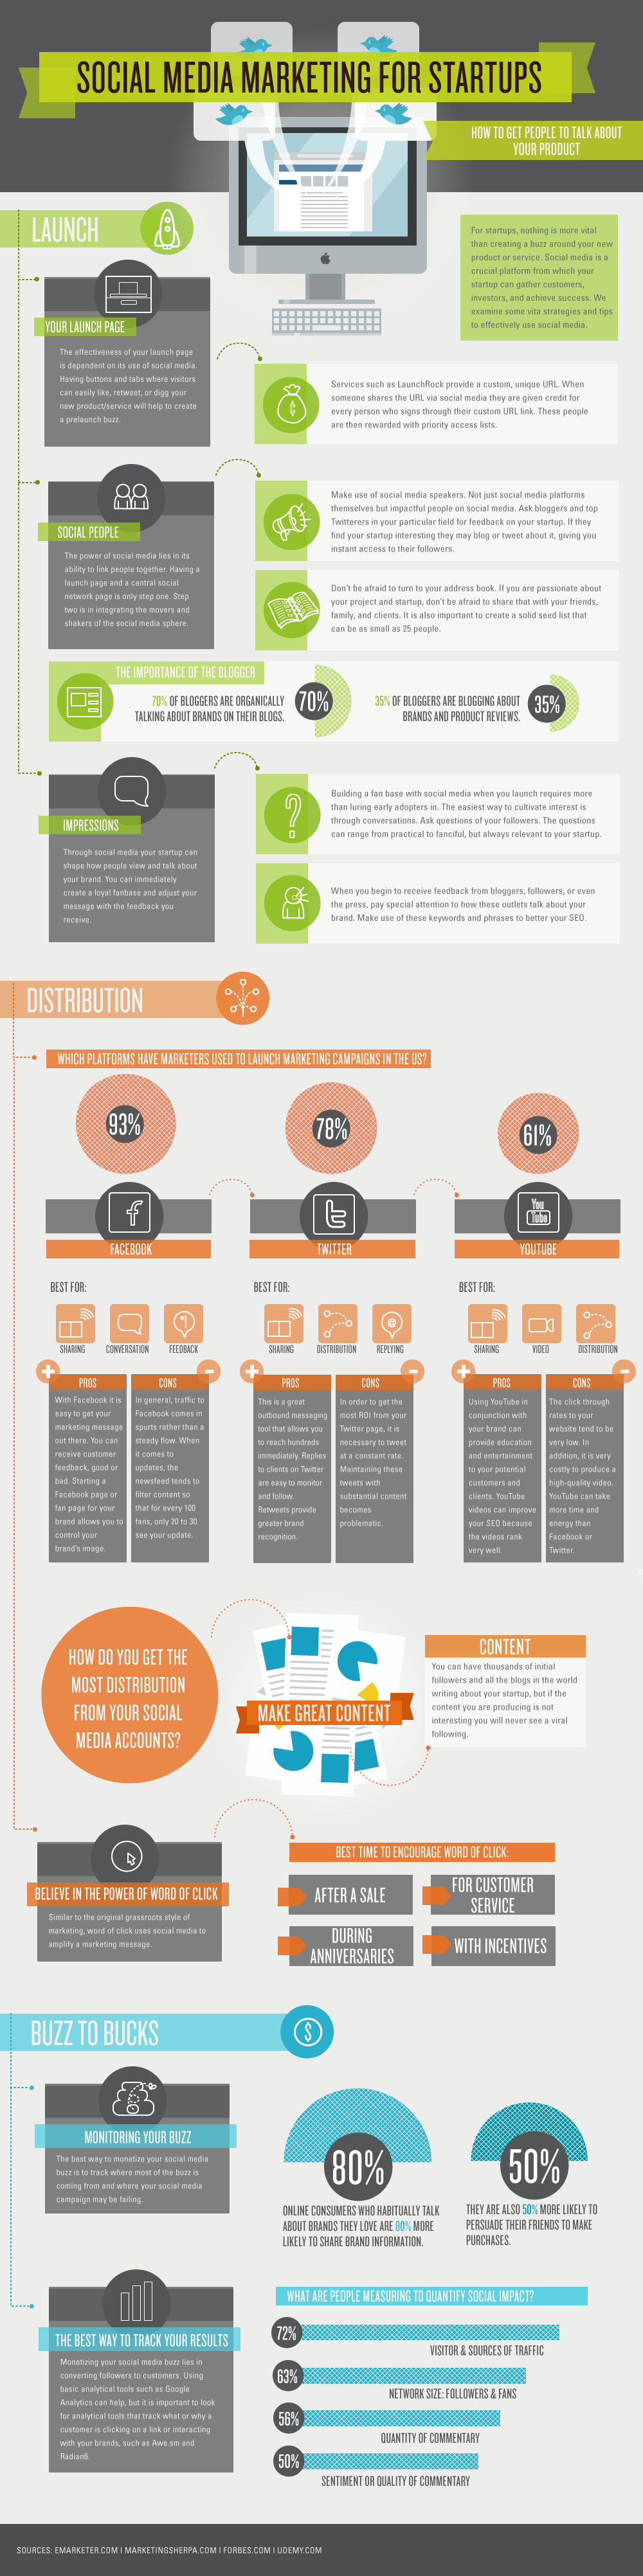 [Infographic] - Social Media Marketing for Startups